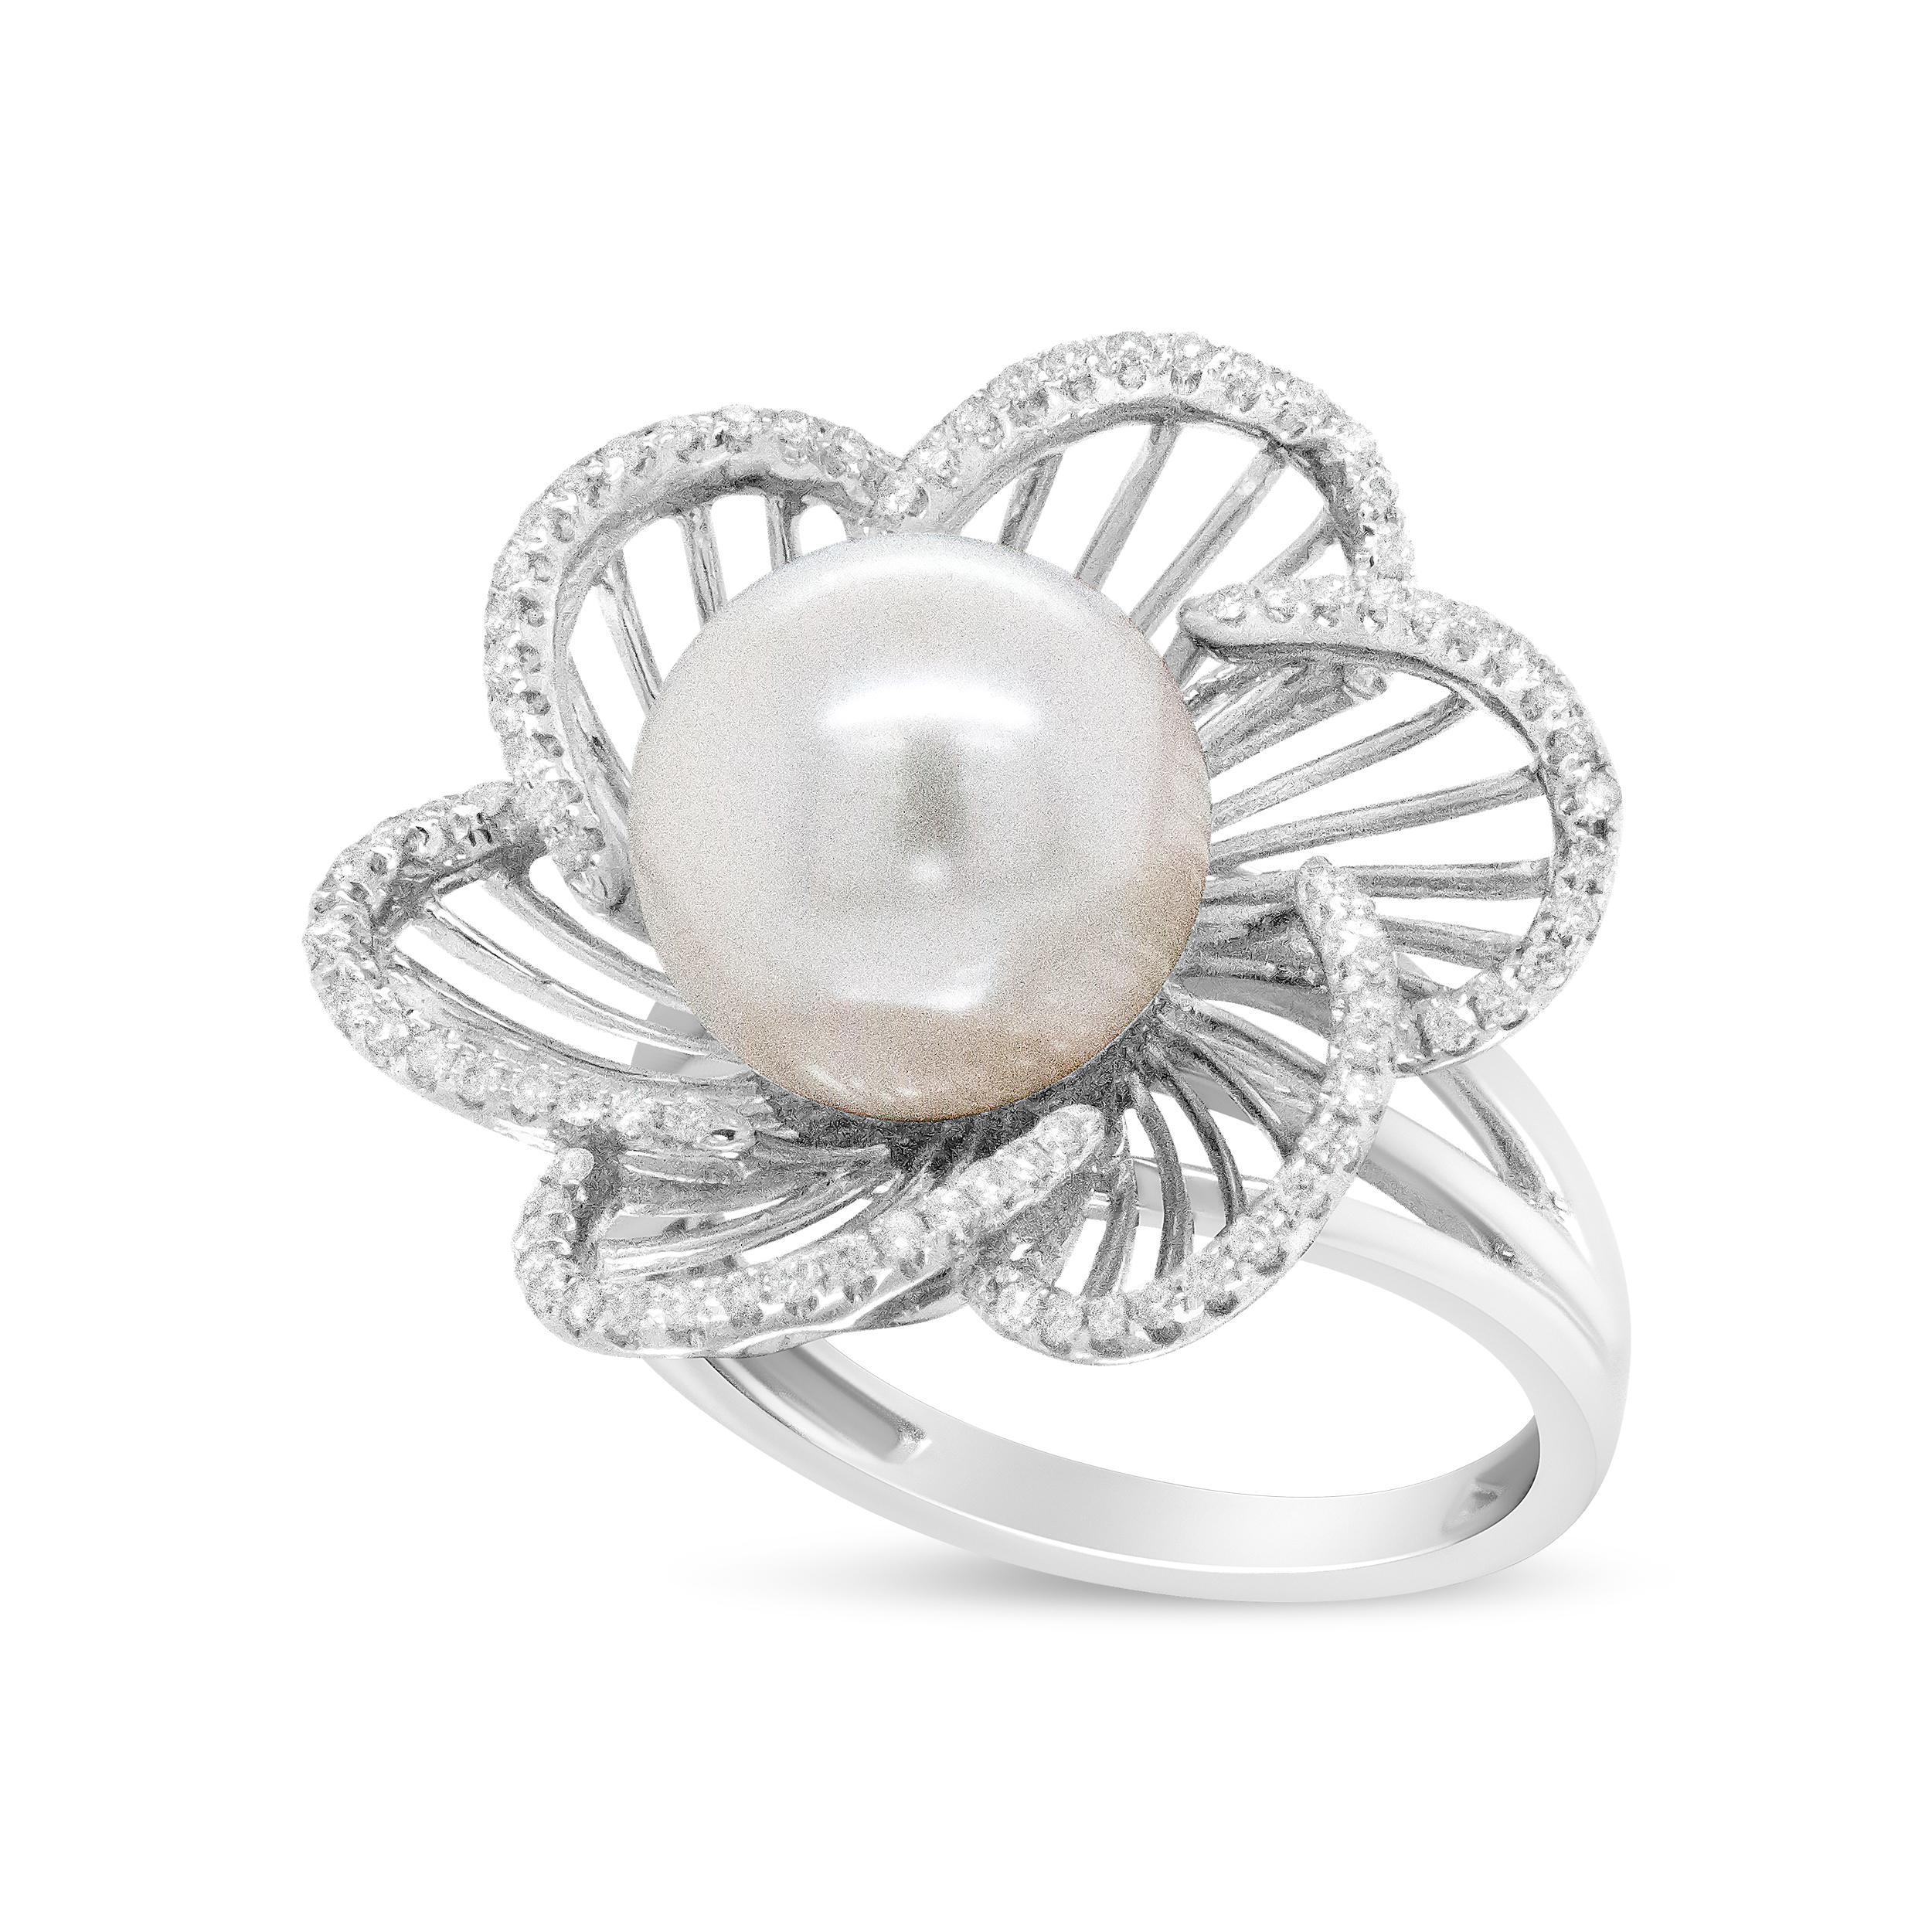 3 carat pearl ring